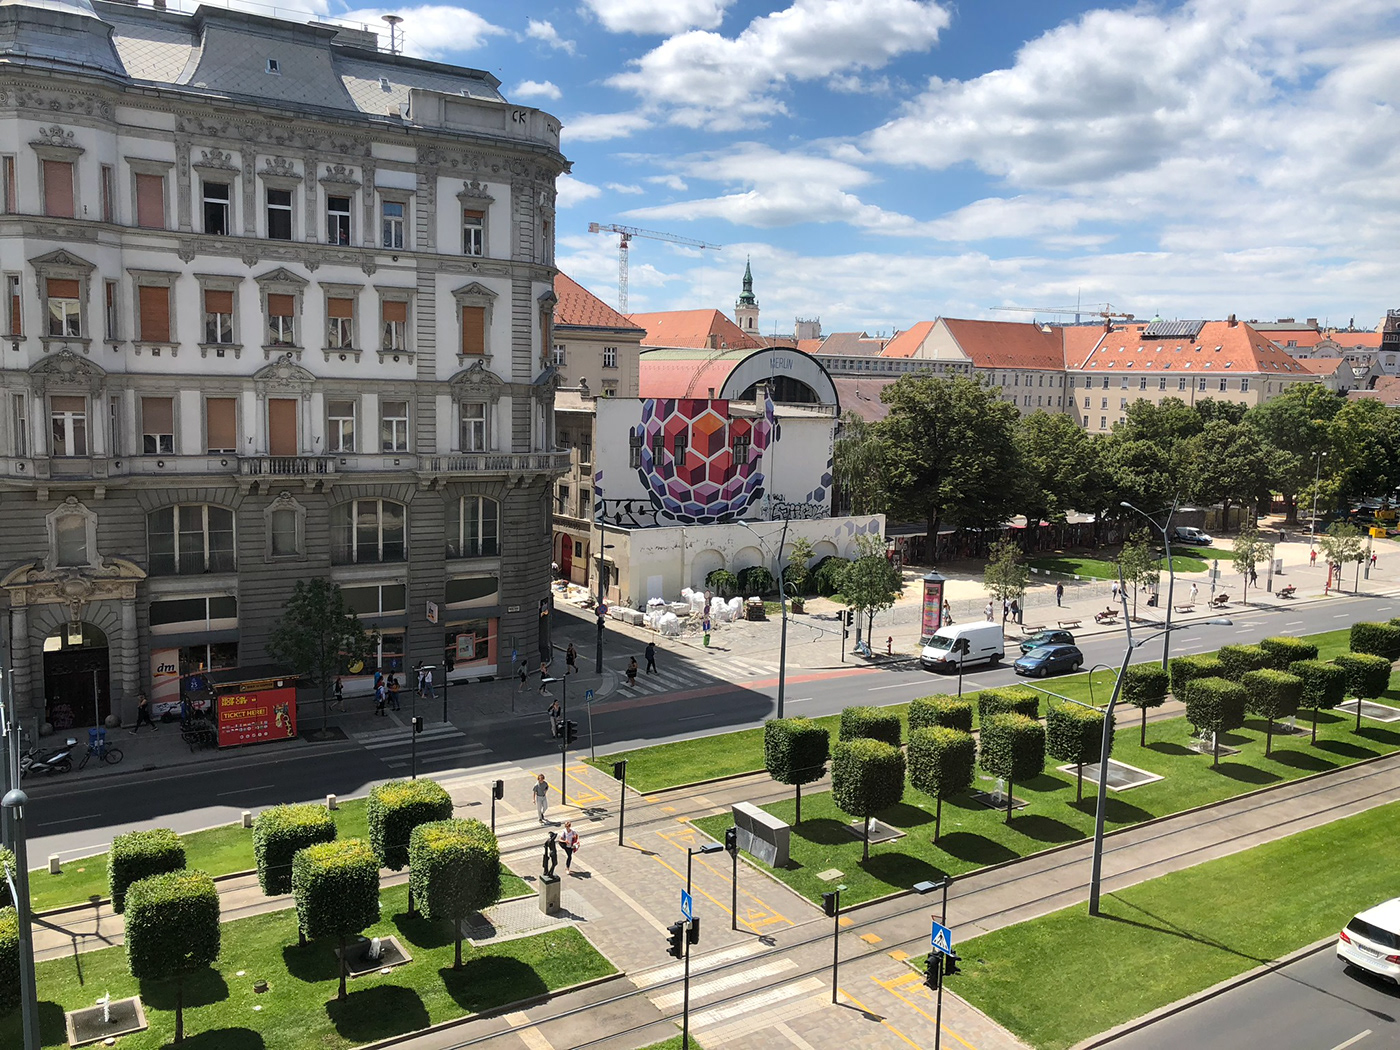 buda Pest budapest land city tourist views vacation summer parliament tour sightseeing year 2018